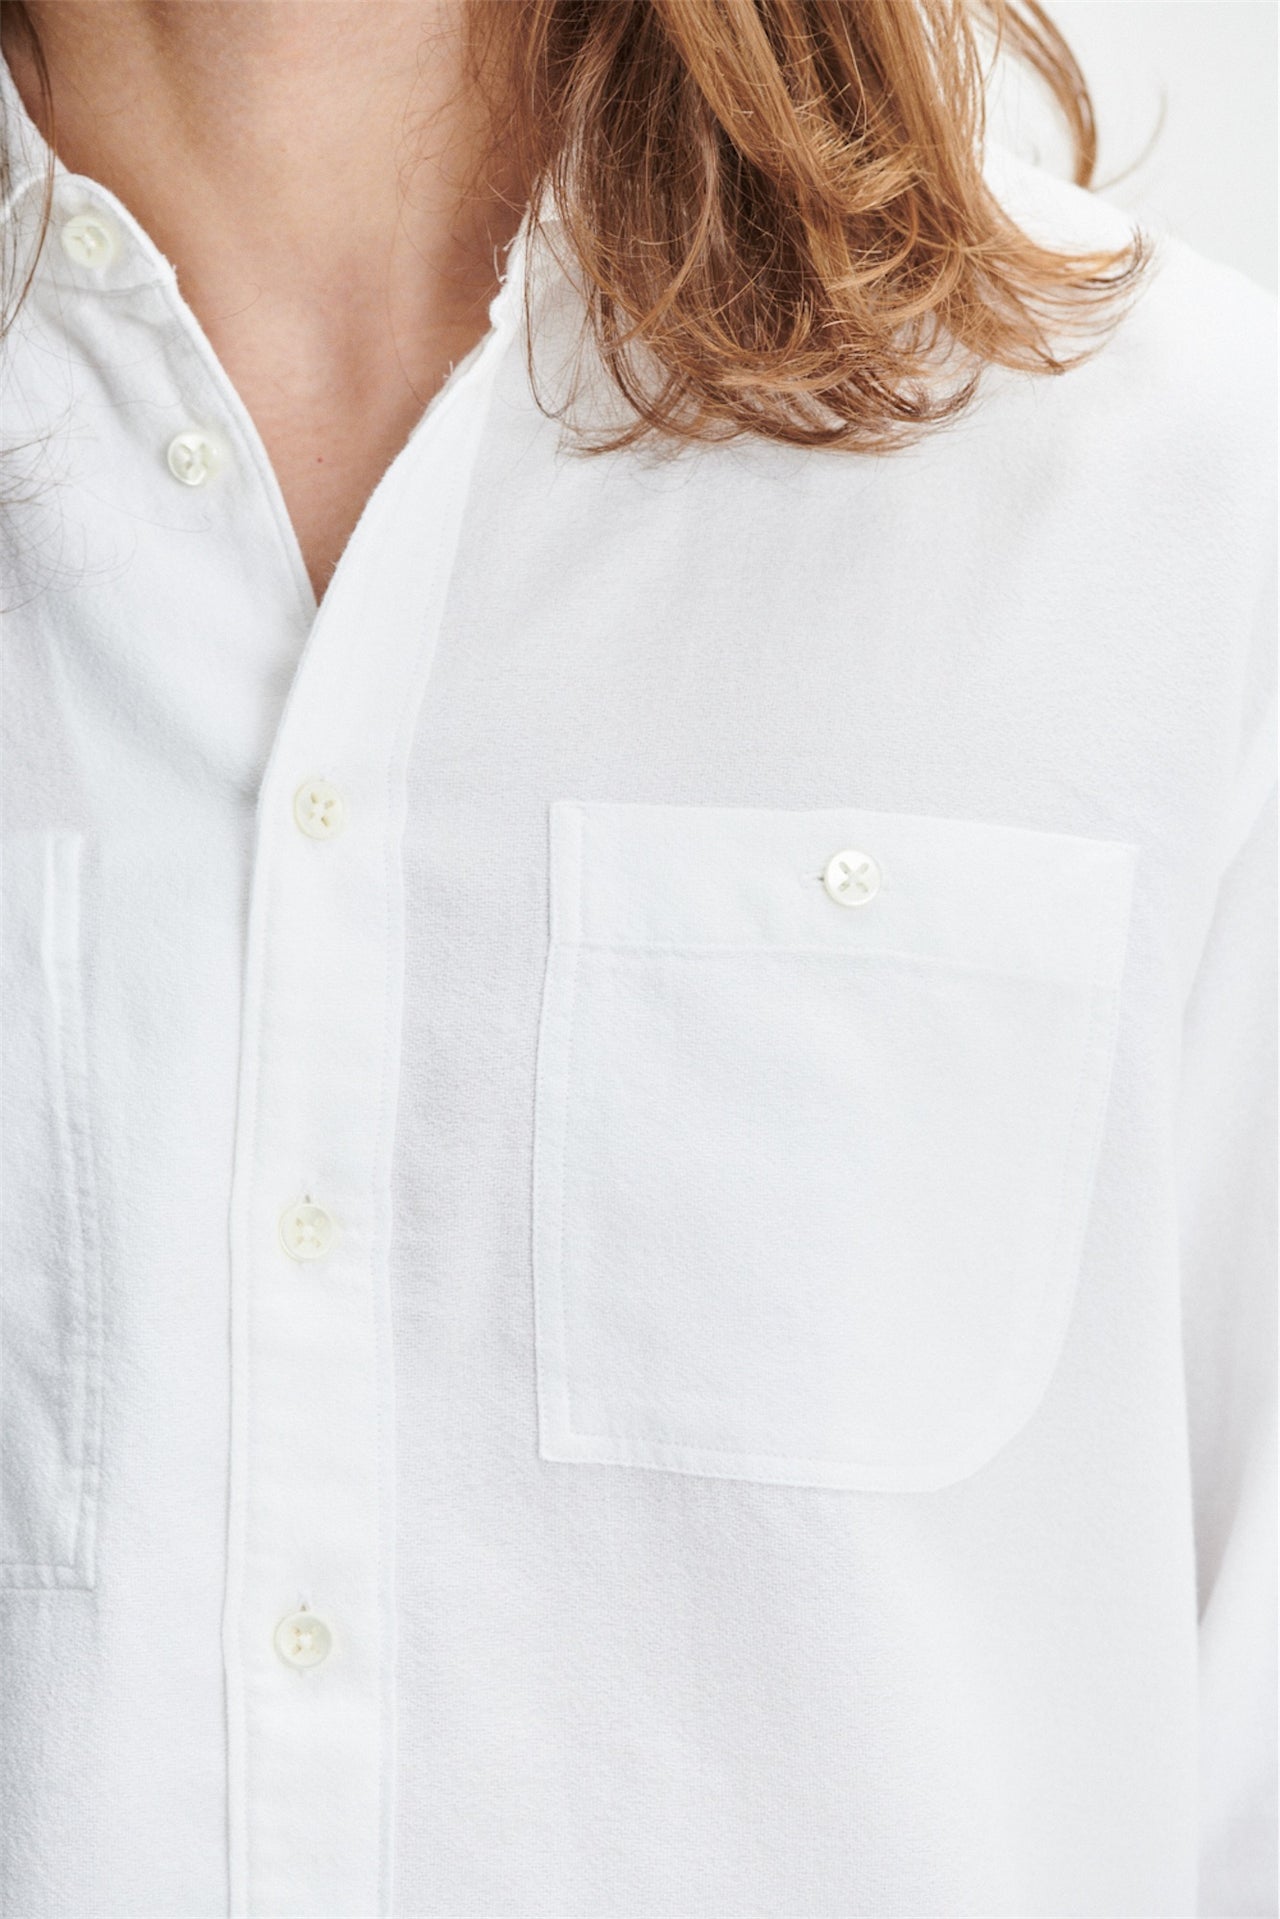 Farmer Shirt in the Finest White Italian Sustainable Cotton Crêpe by Leggiuno